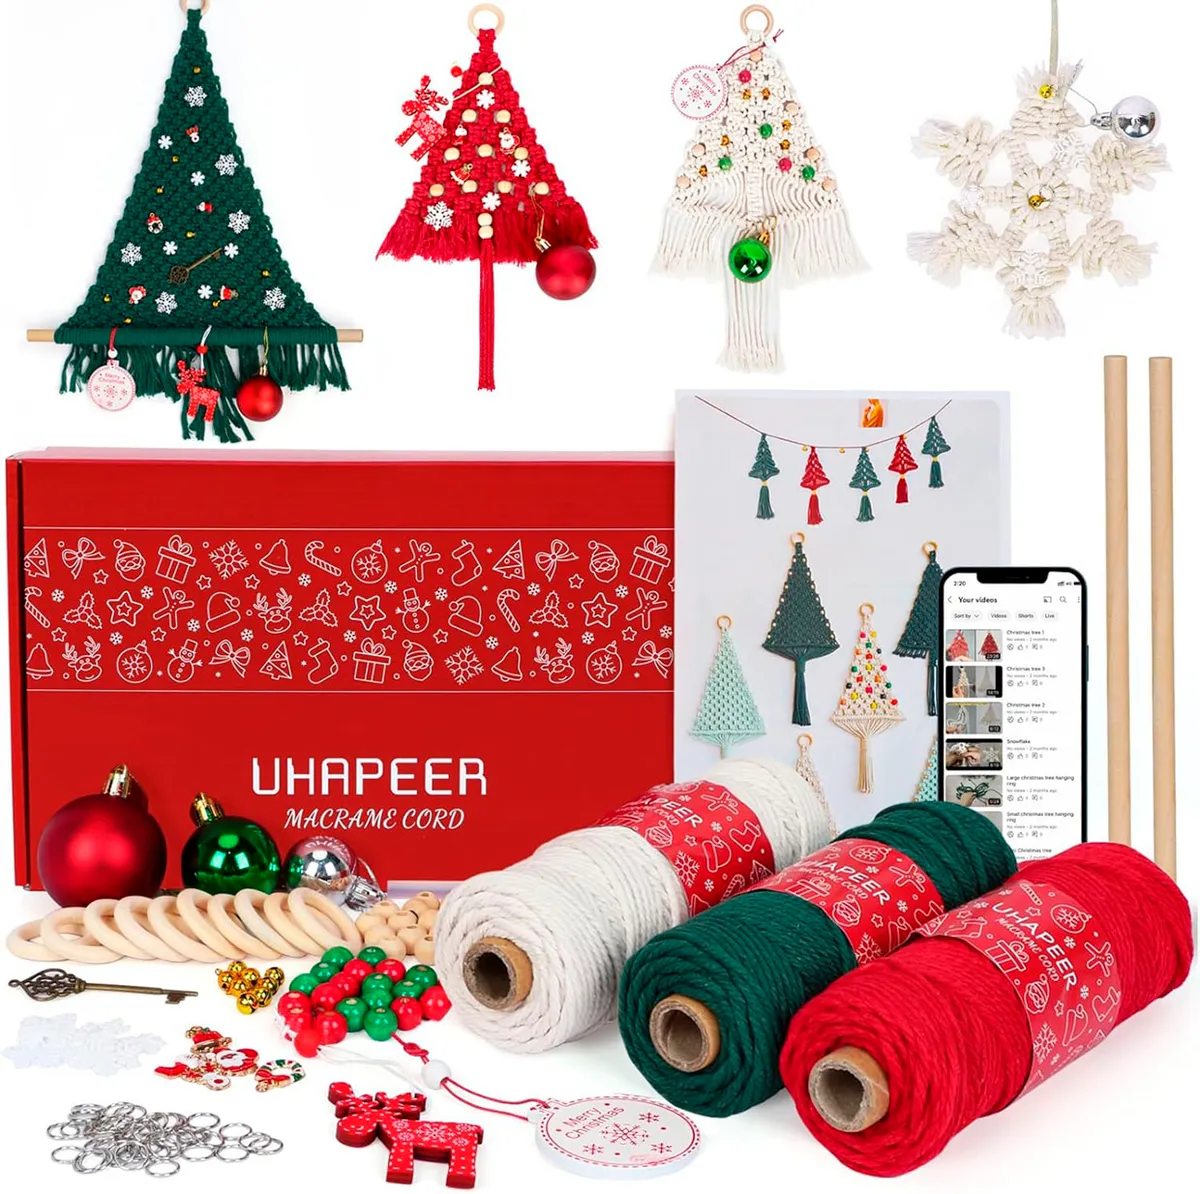 Uhapeer Christmas macrame kit